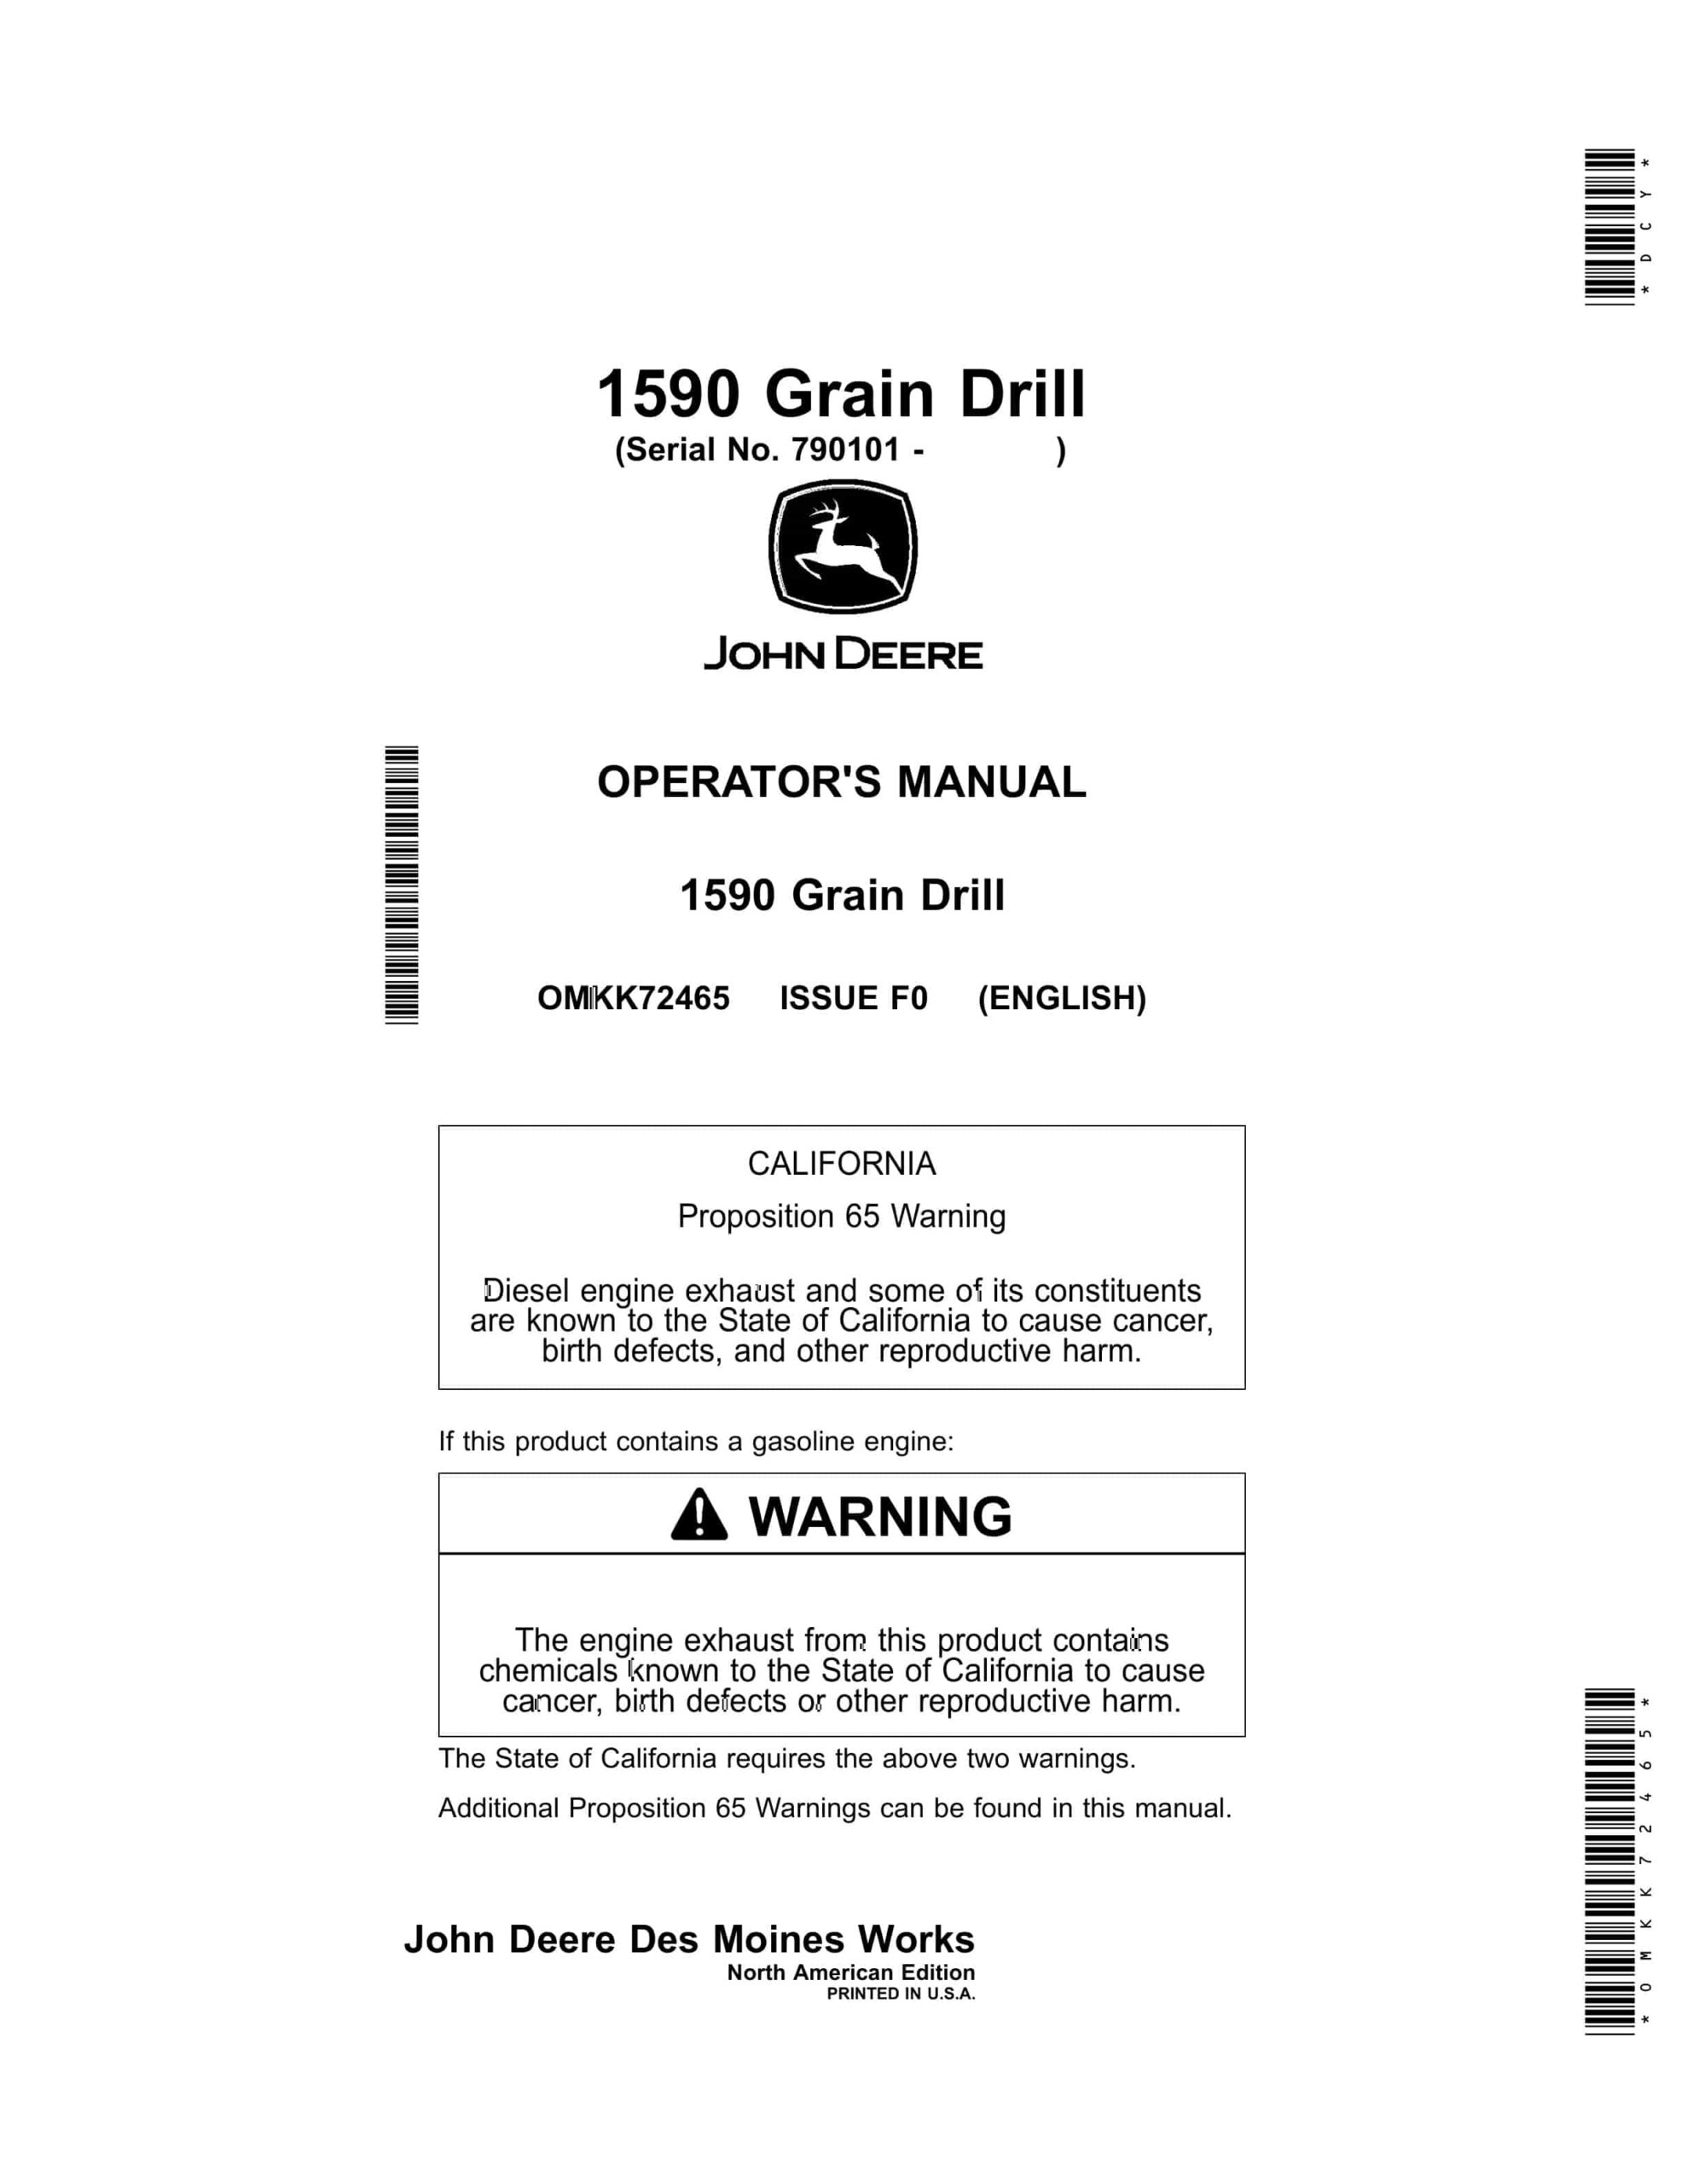 John Deere 1590 Grain Drill Operator Manual OMKK72465-1